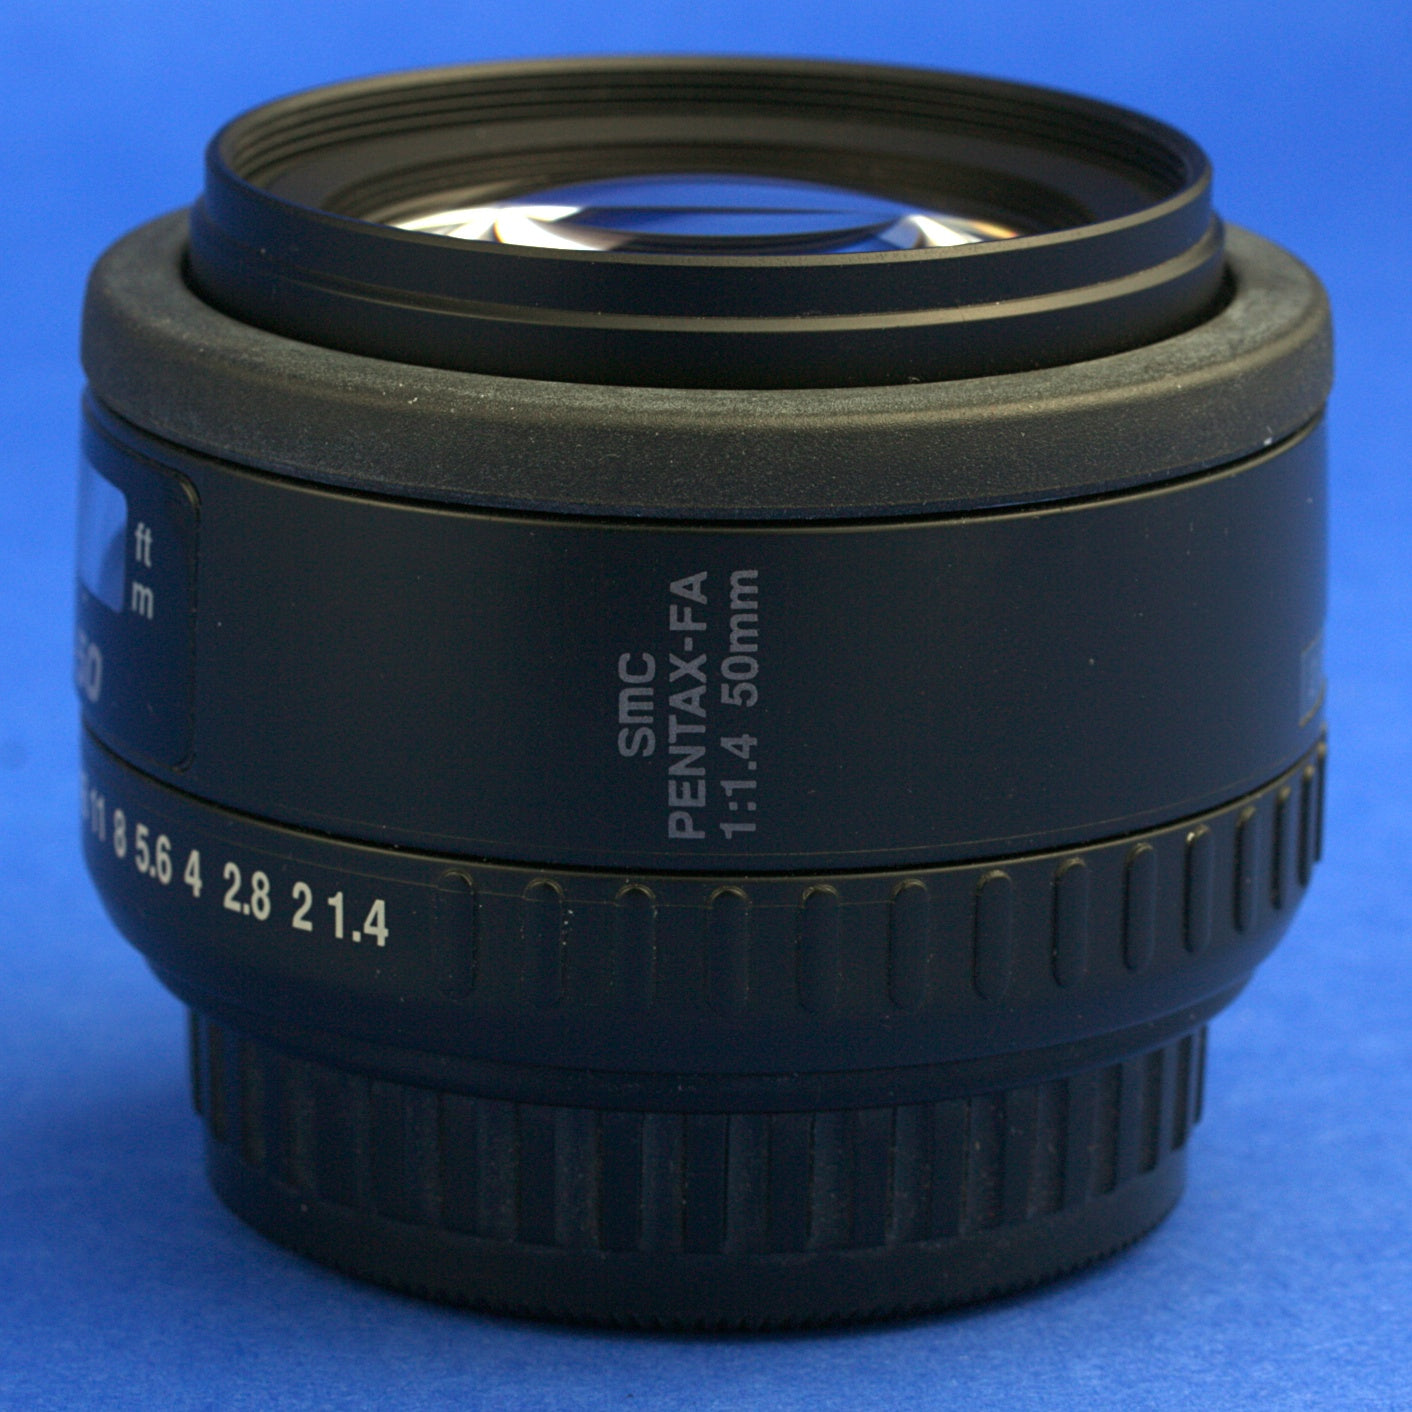 Pentax-FA 50mm 1.4 Lens